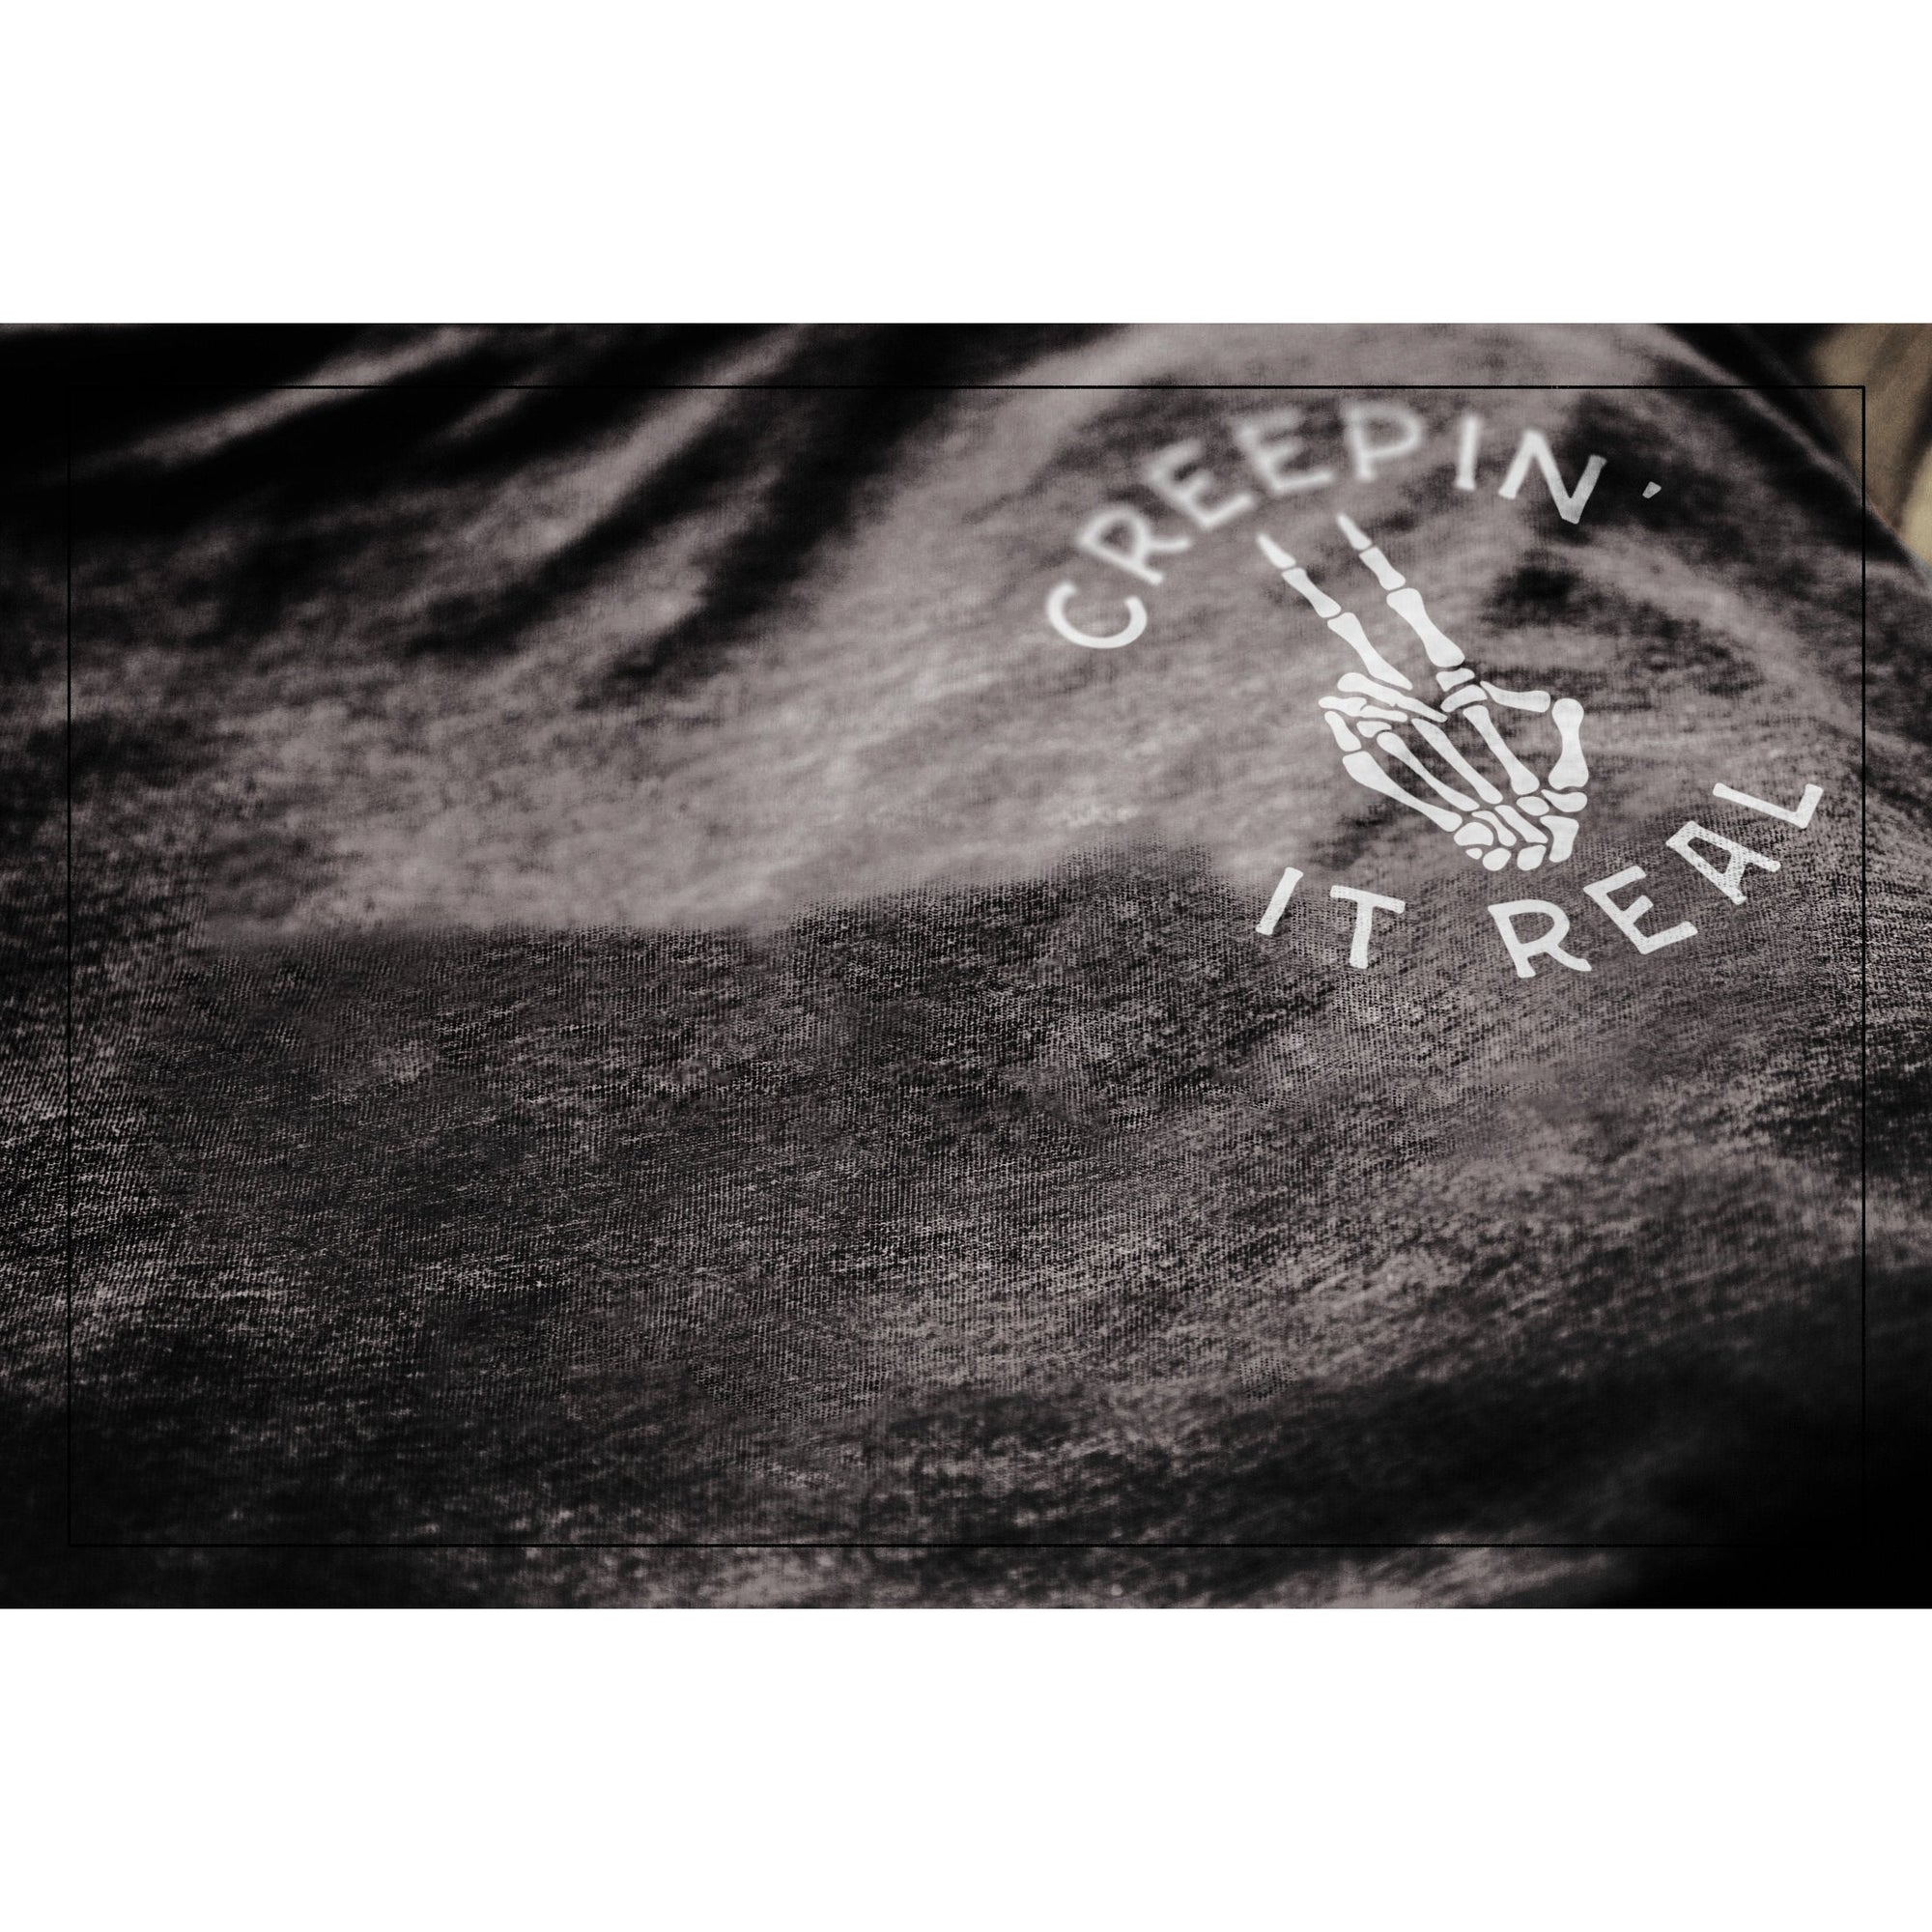 Creepin It Real Black Printed Graphic Men's Crew T-Shirt Tee Closeup Details